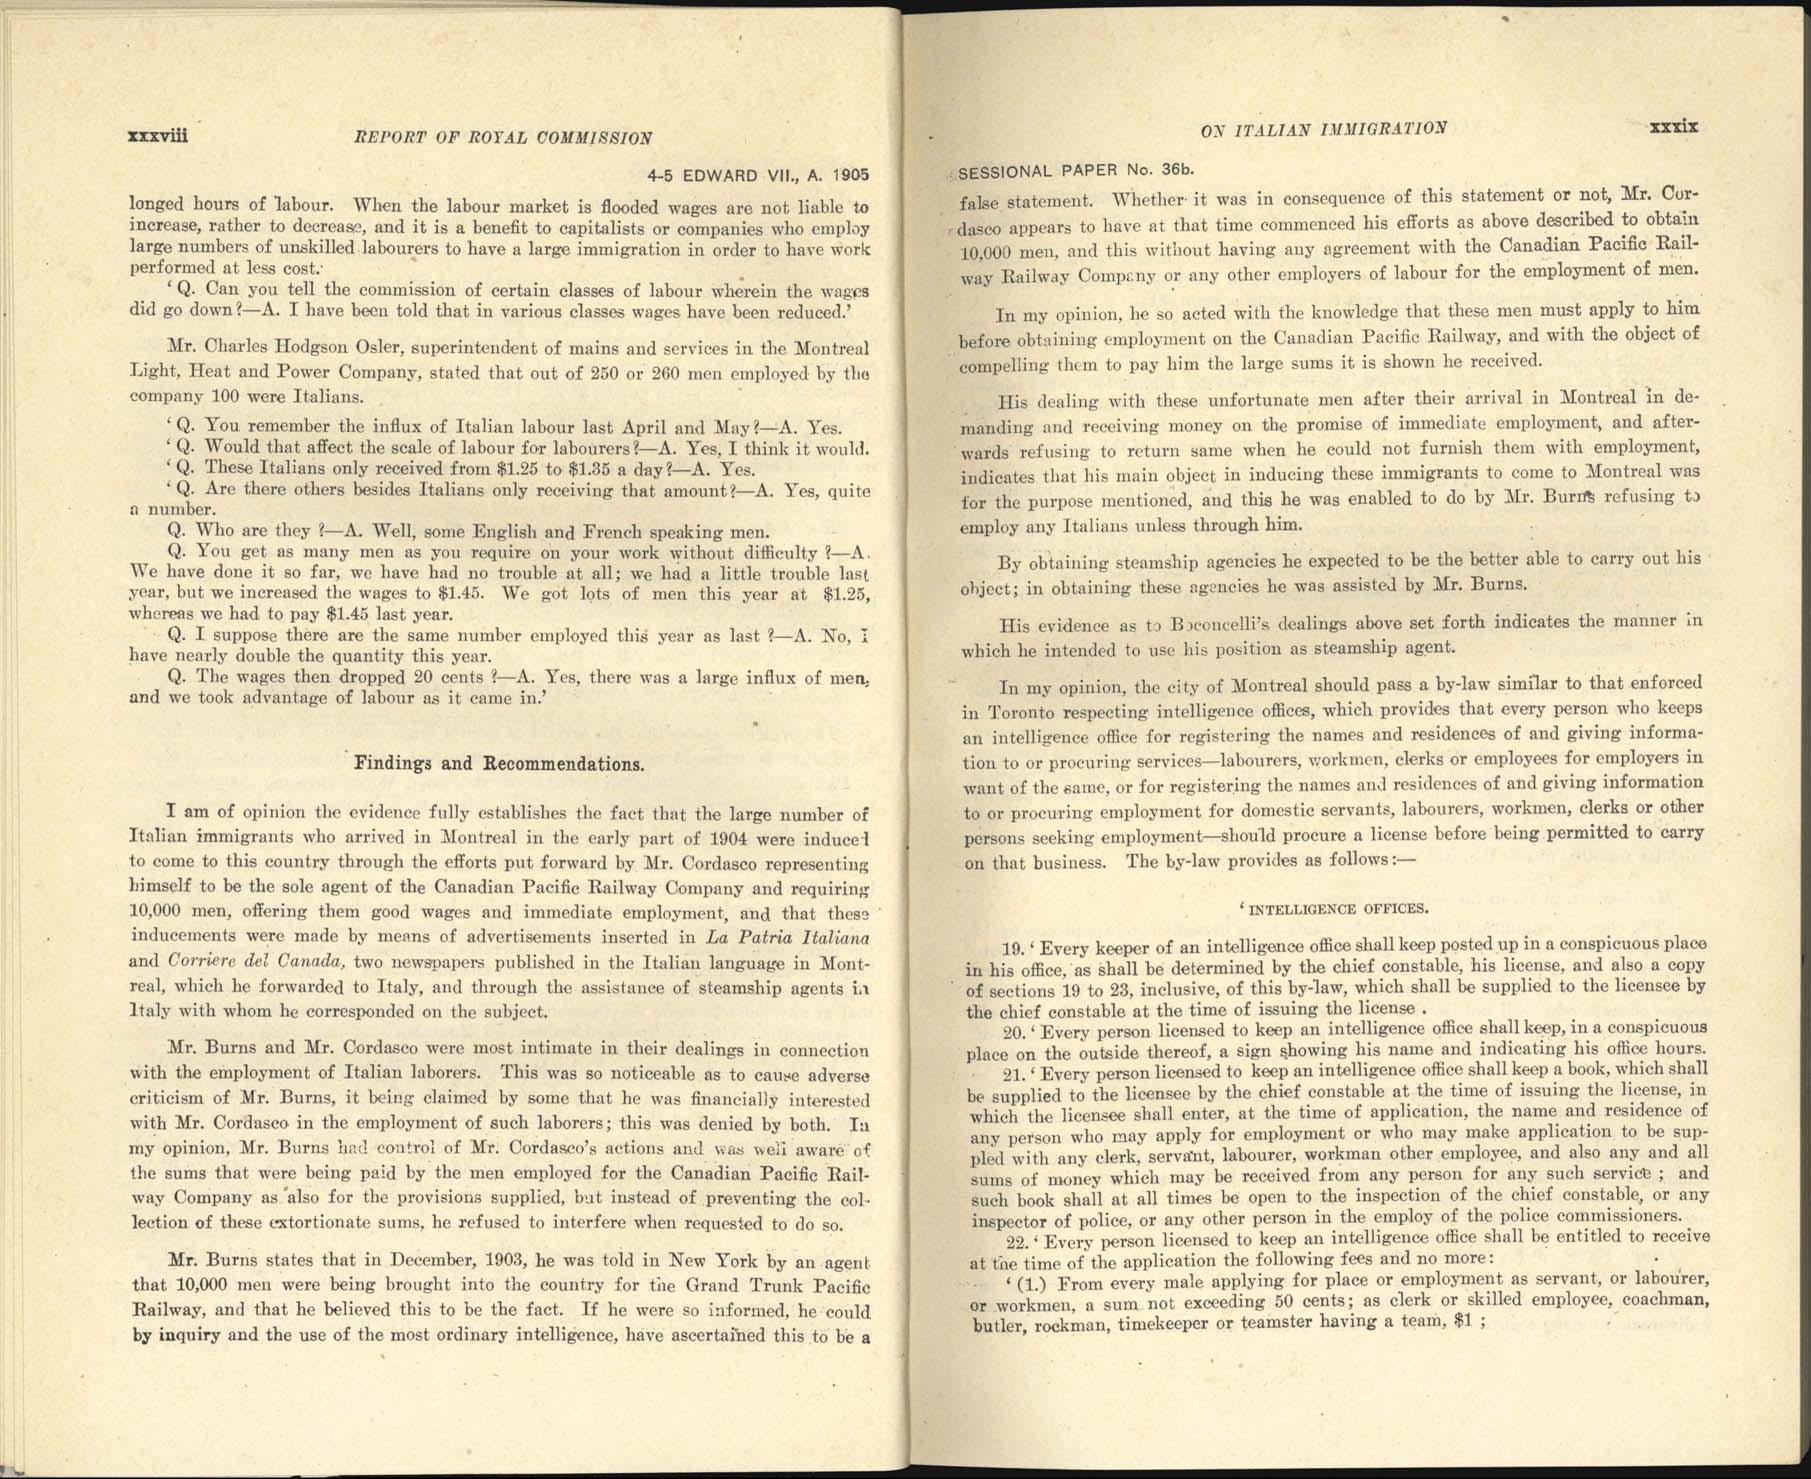 page xxxviii, xxxix Royal Commission on Italian Immigration, 1904-1905